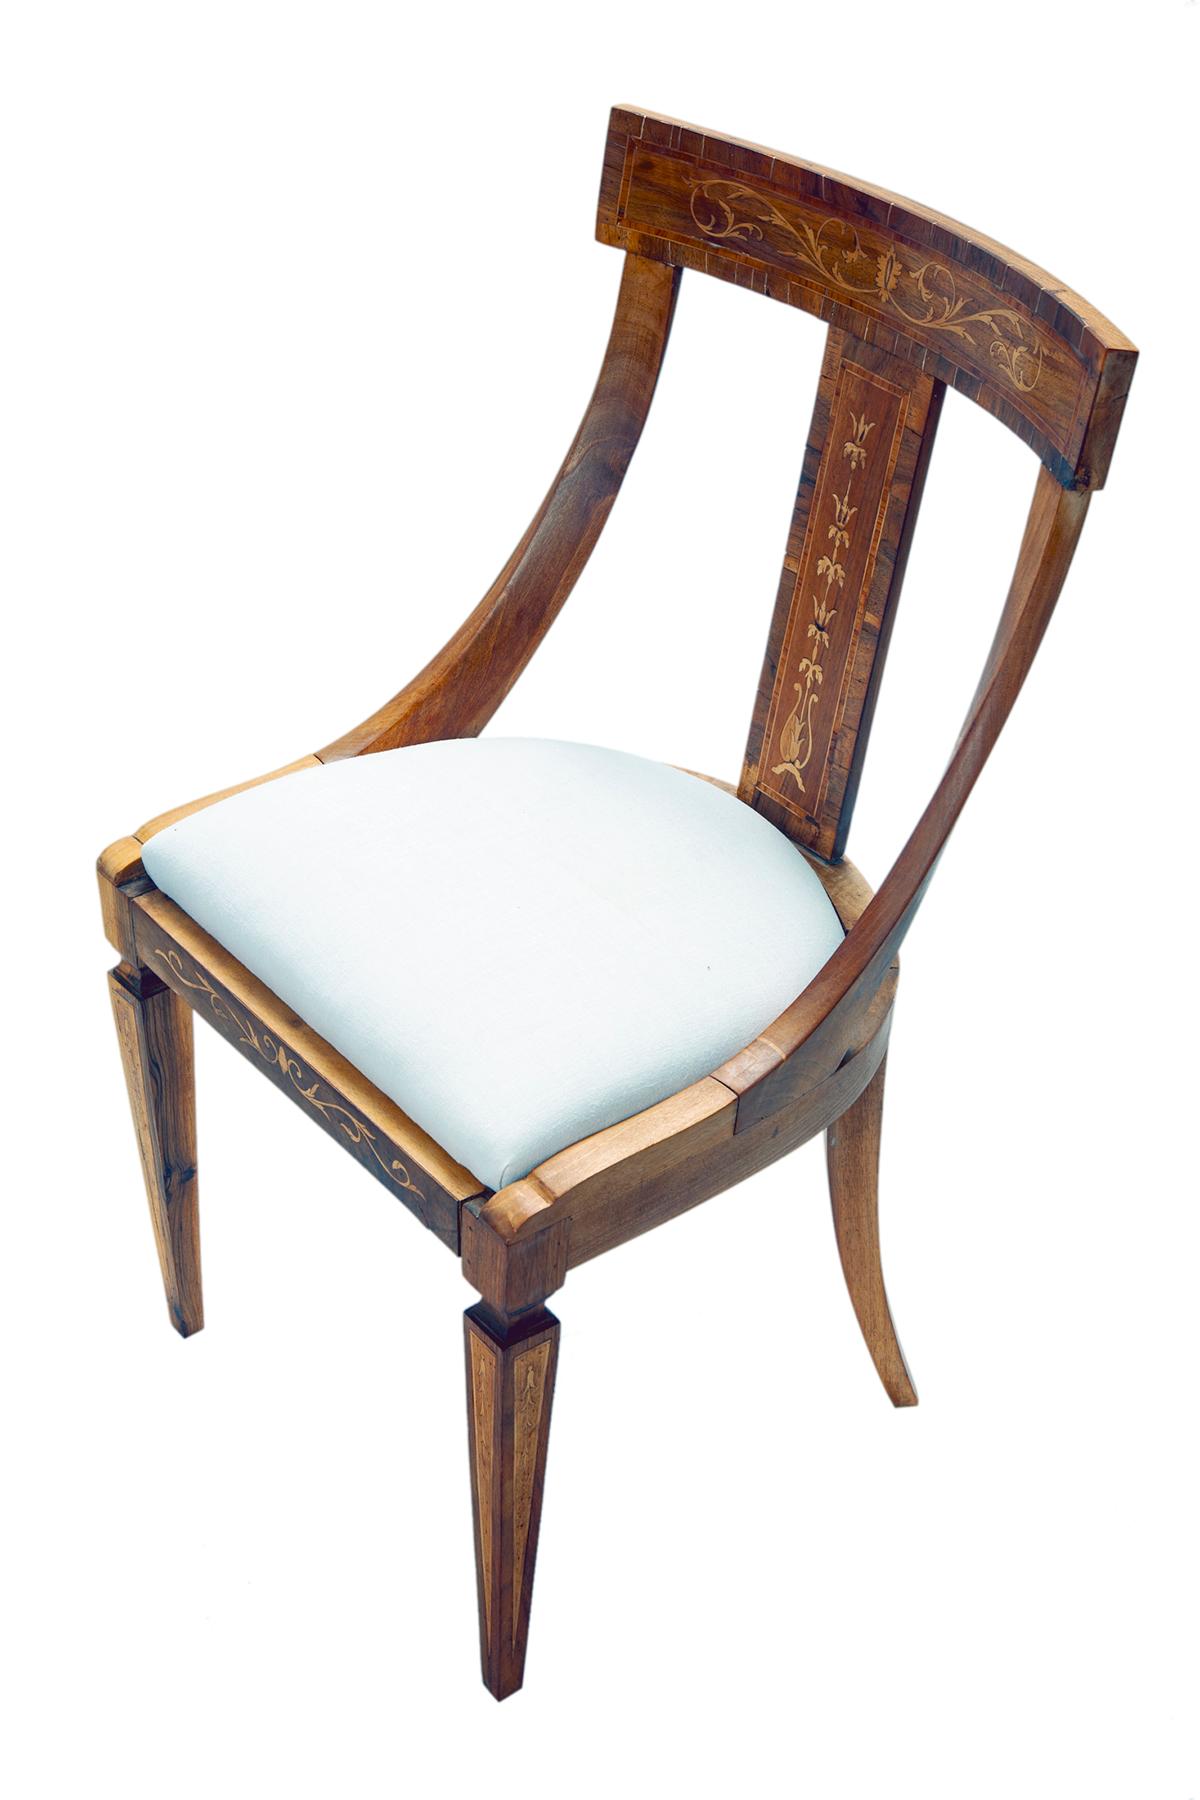 19th Century 19th C European Biedermeier Inlaid Dining Chairs / Linen Seats Set of 5